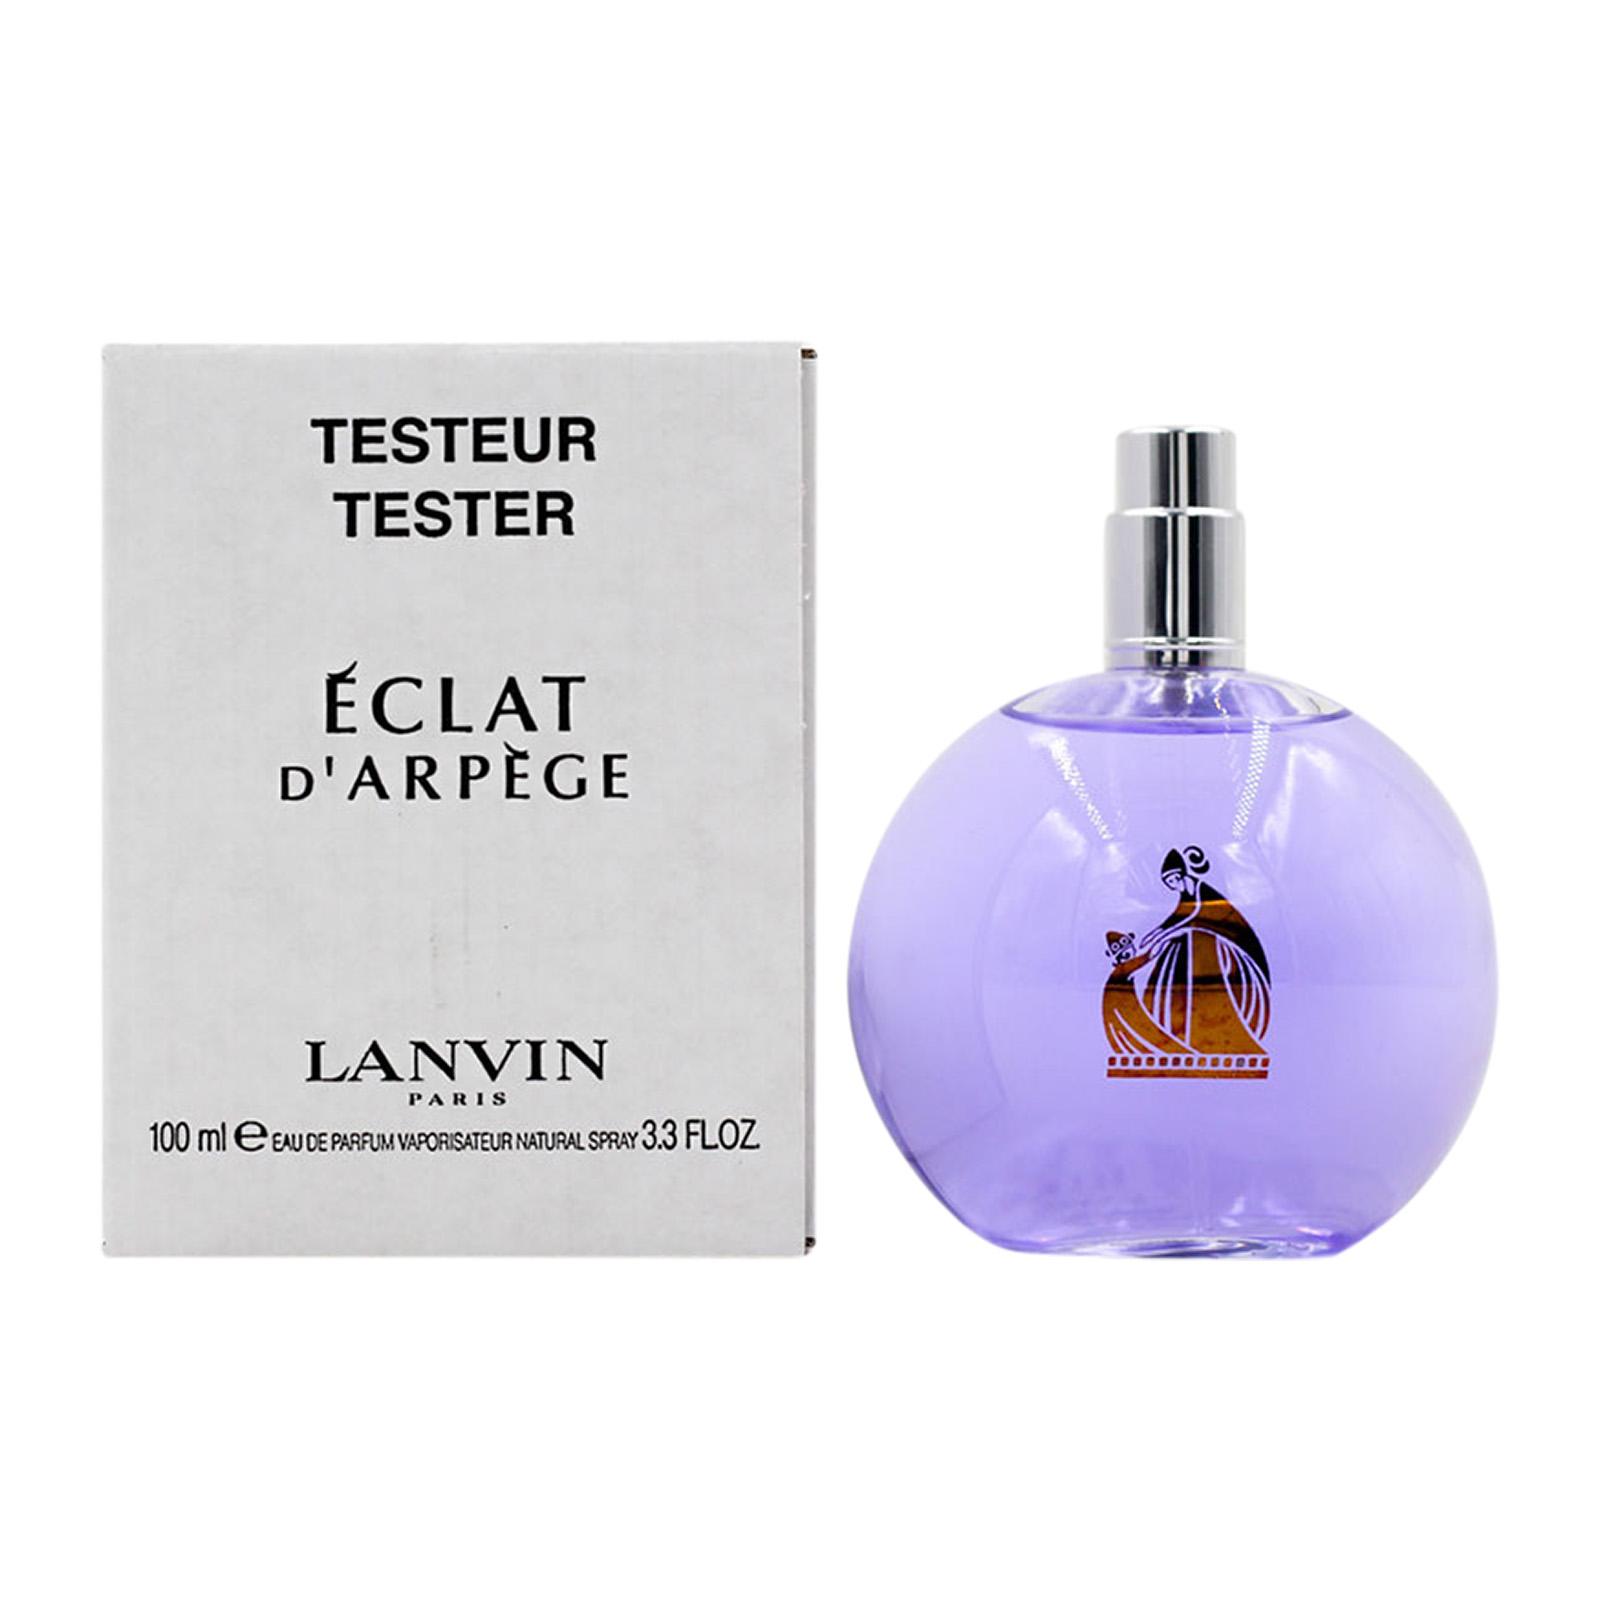 Купить Парфюмерная вода Lanvin, Lanvin Eclat D'arpege Pour Femme 100ml тестер, Франция